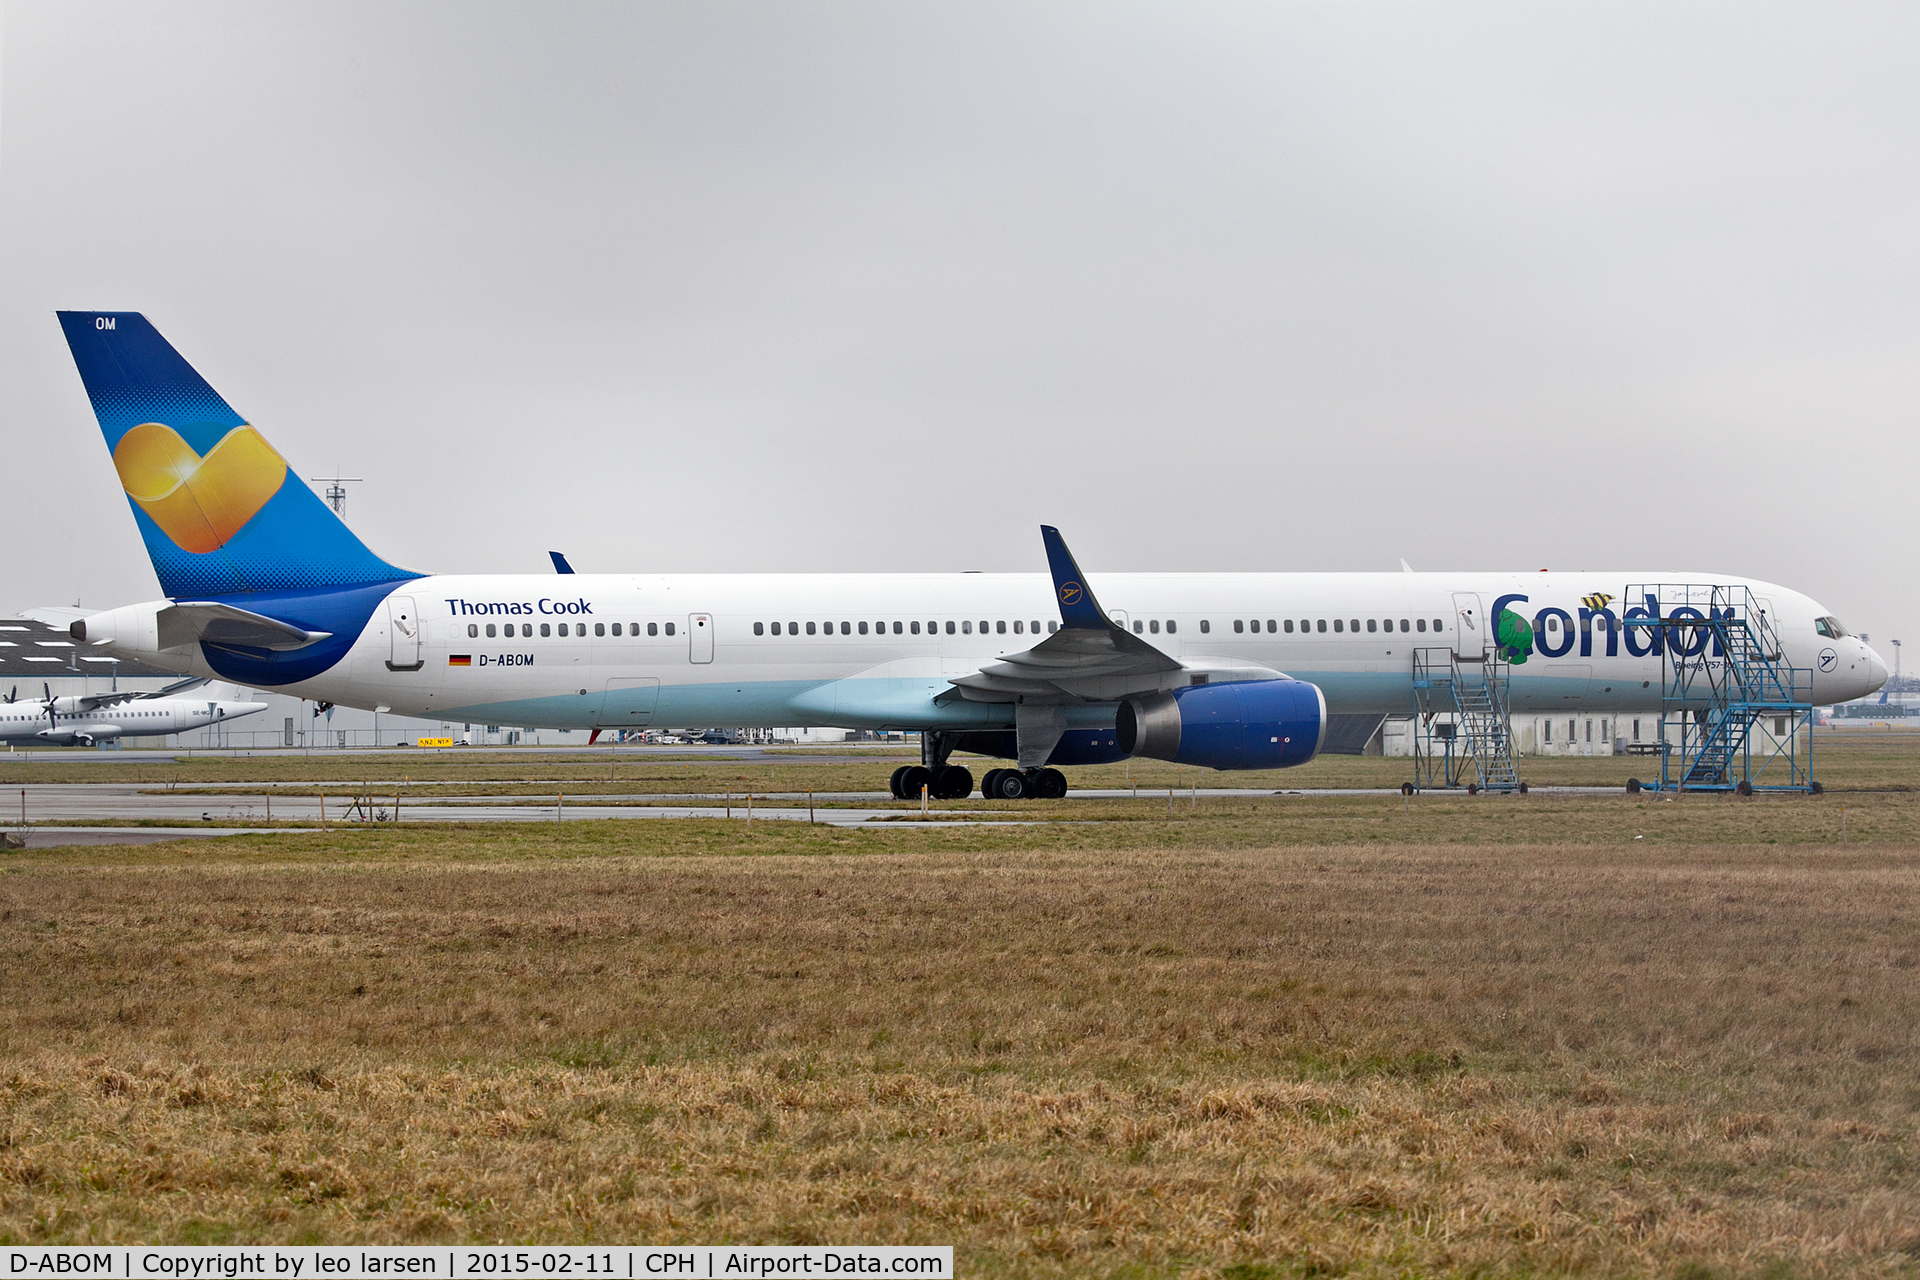 D-ABOM, 2000 Boeing 757-330 C/N 29022, Copenhagen 11.2.2015